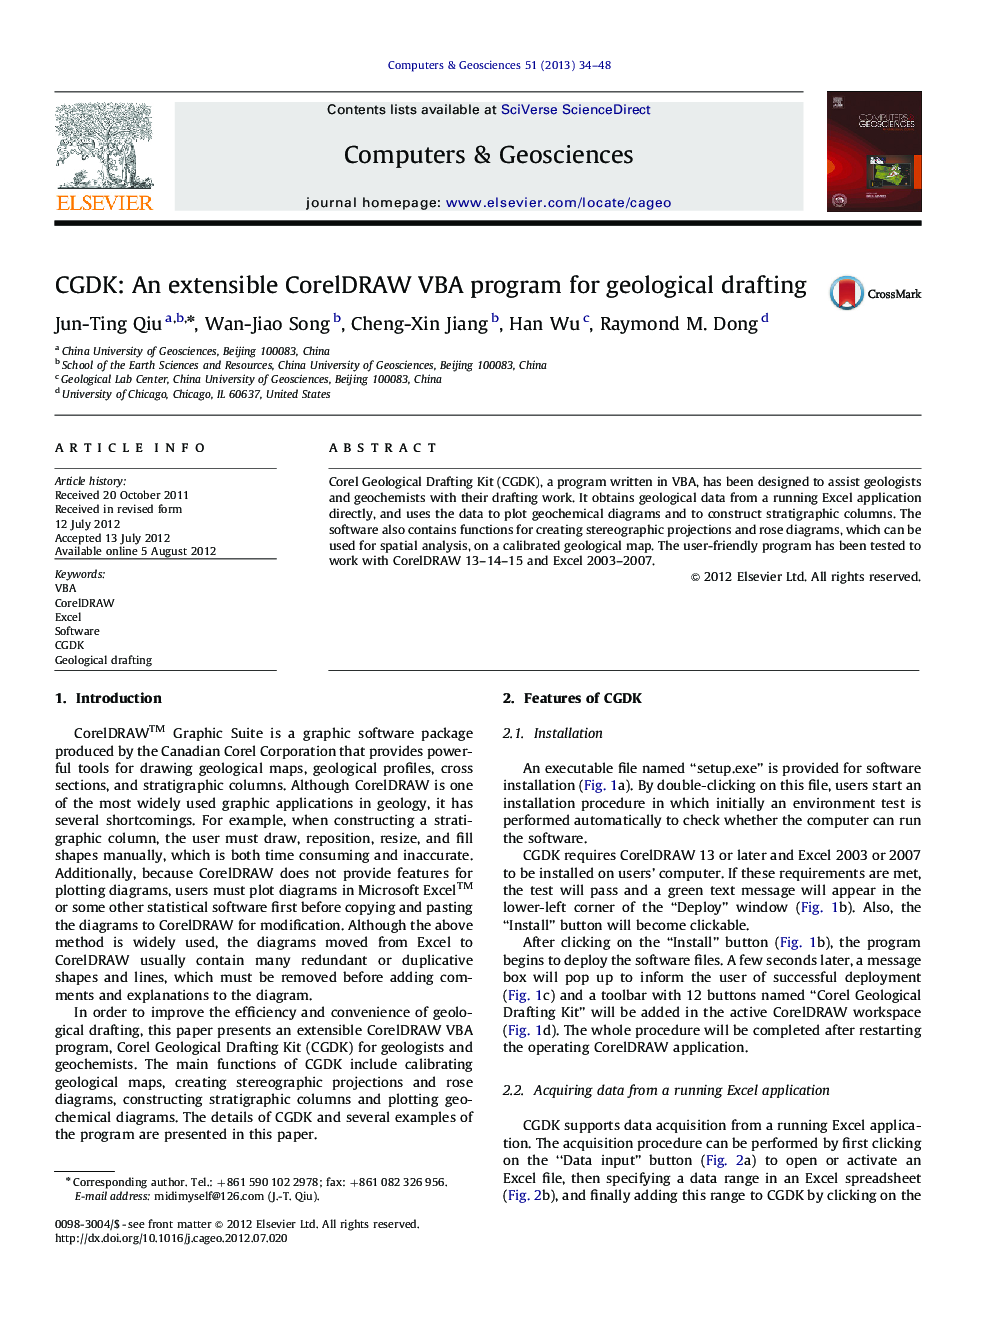 CGDK: An extensible CorelDRAW VBA program for geological drafting